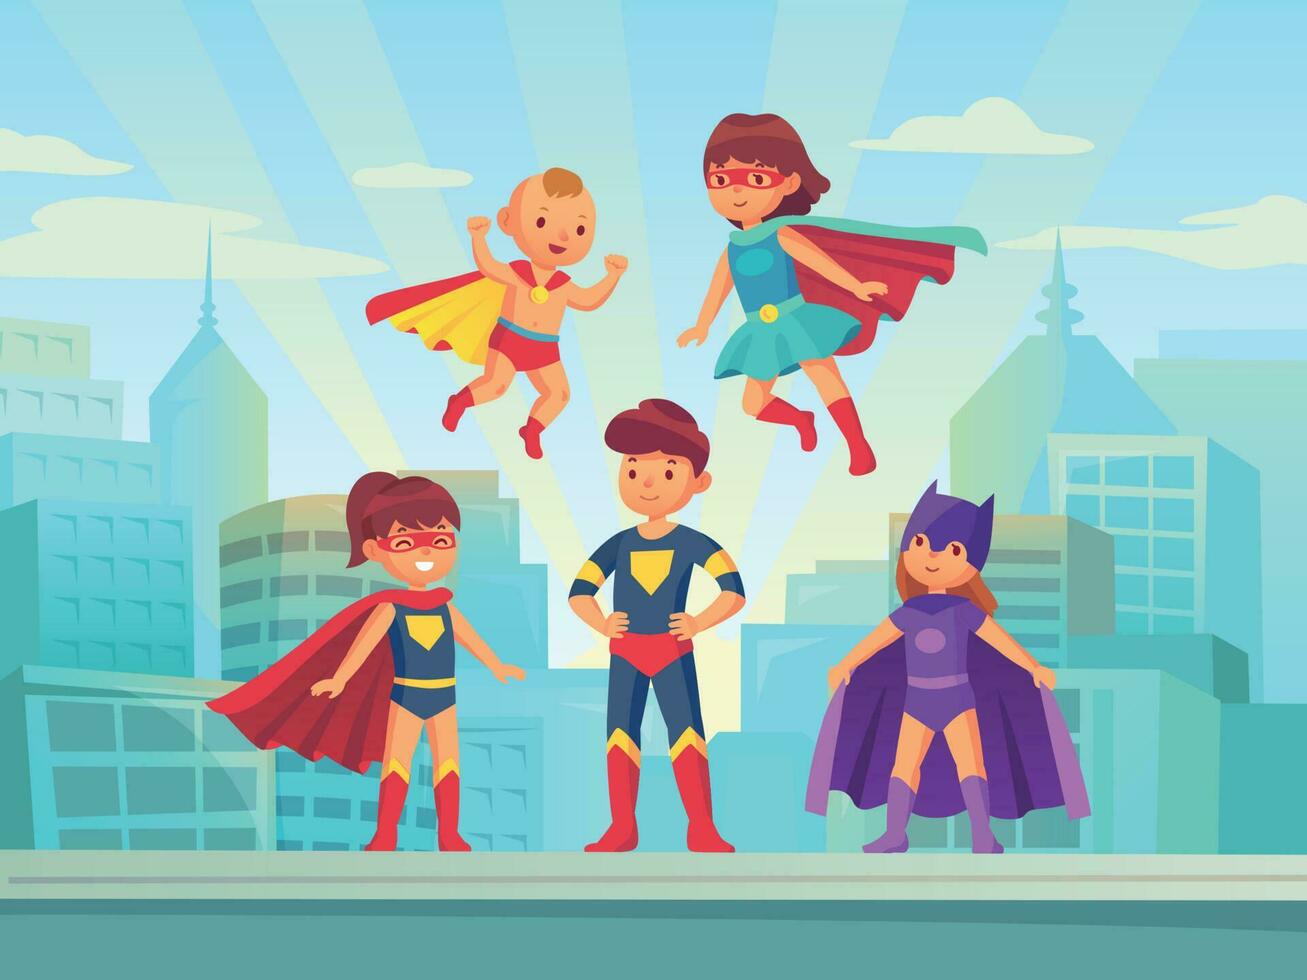 Superheld Kinder Team. Comic Held Kind im Super Kostüm mit Mantel auf städtisch Dach. Kinder Superhelden Vektor Karikatur Illustration